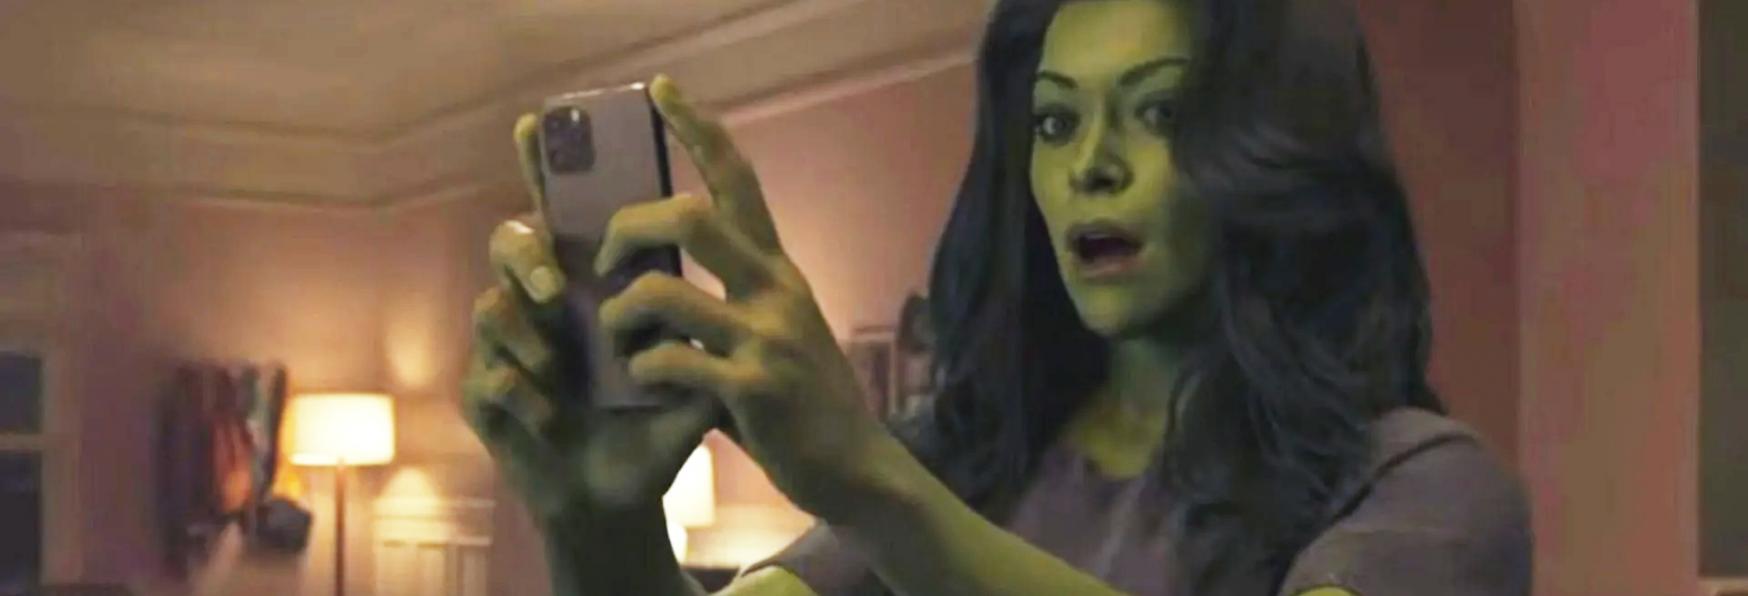 She-Hulk: la Bizzarra Campagna pubblicitaria su...Tinder?!